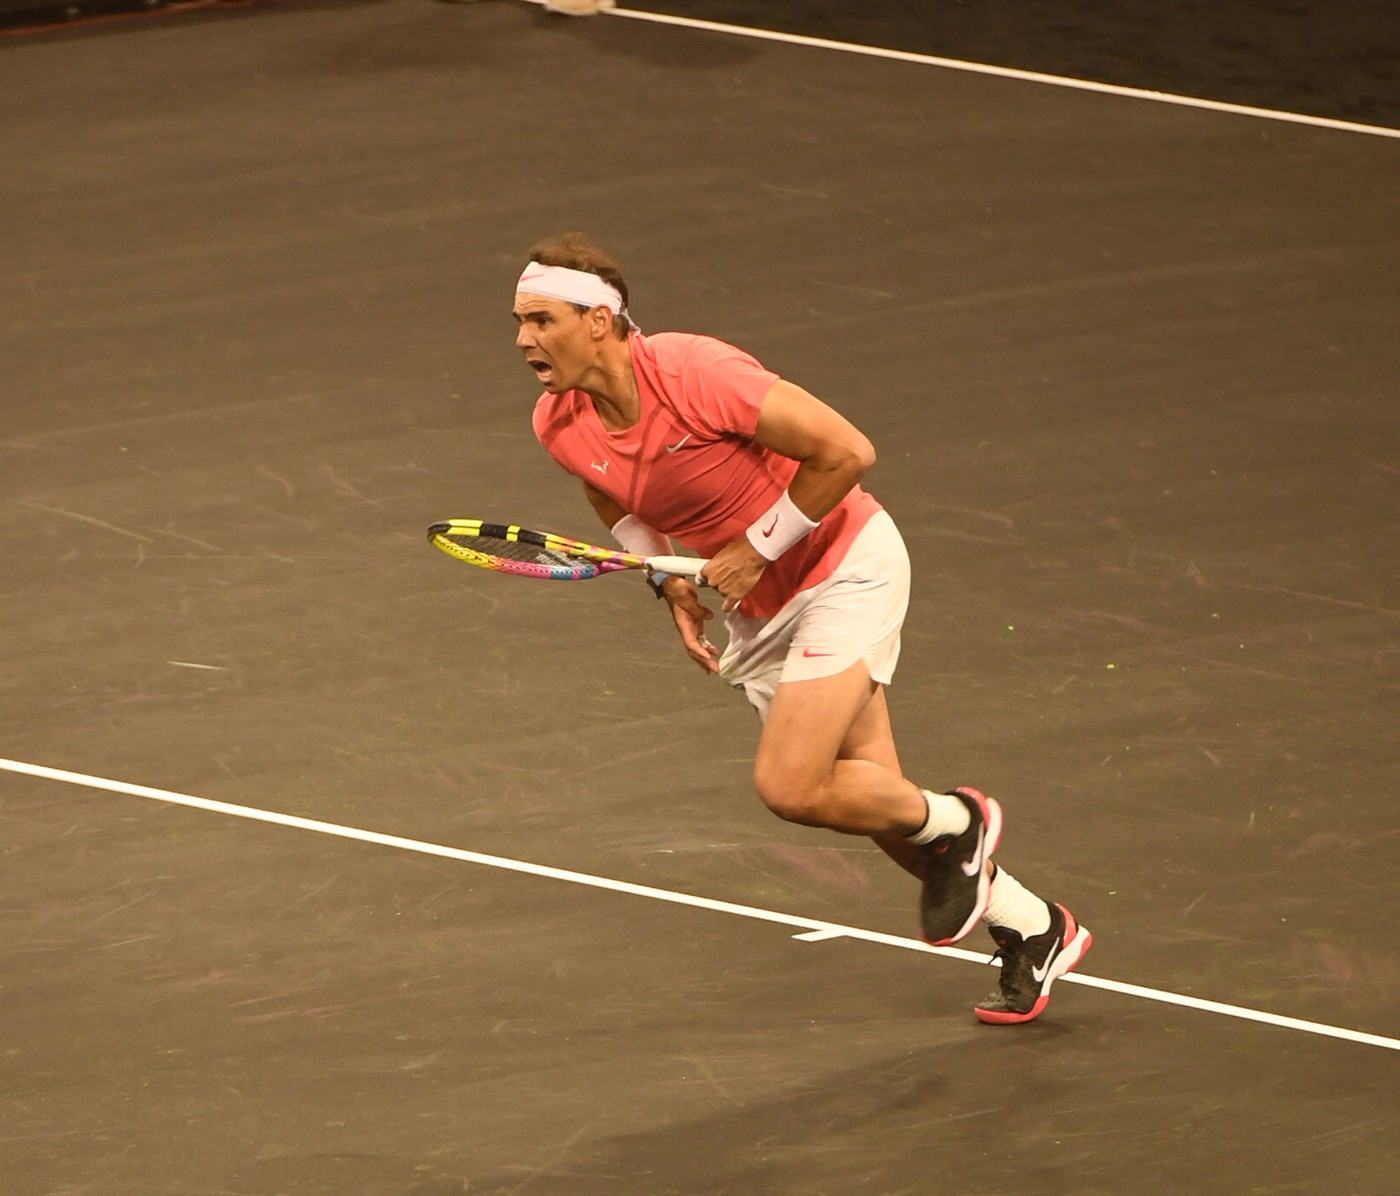 Măcar Roger și Serena s-au retras cu demnitate! Rafael Nadal, mitraliat după ultima apariție: E oribil! Rușine!